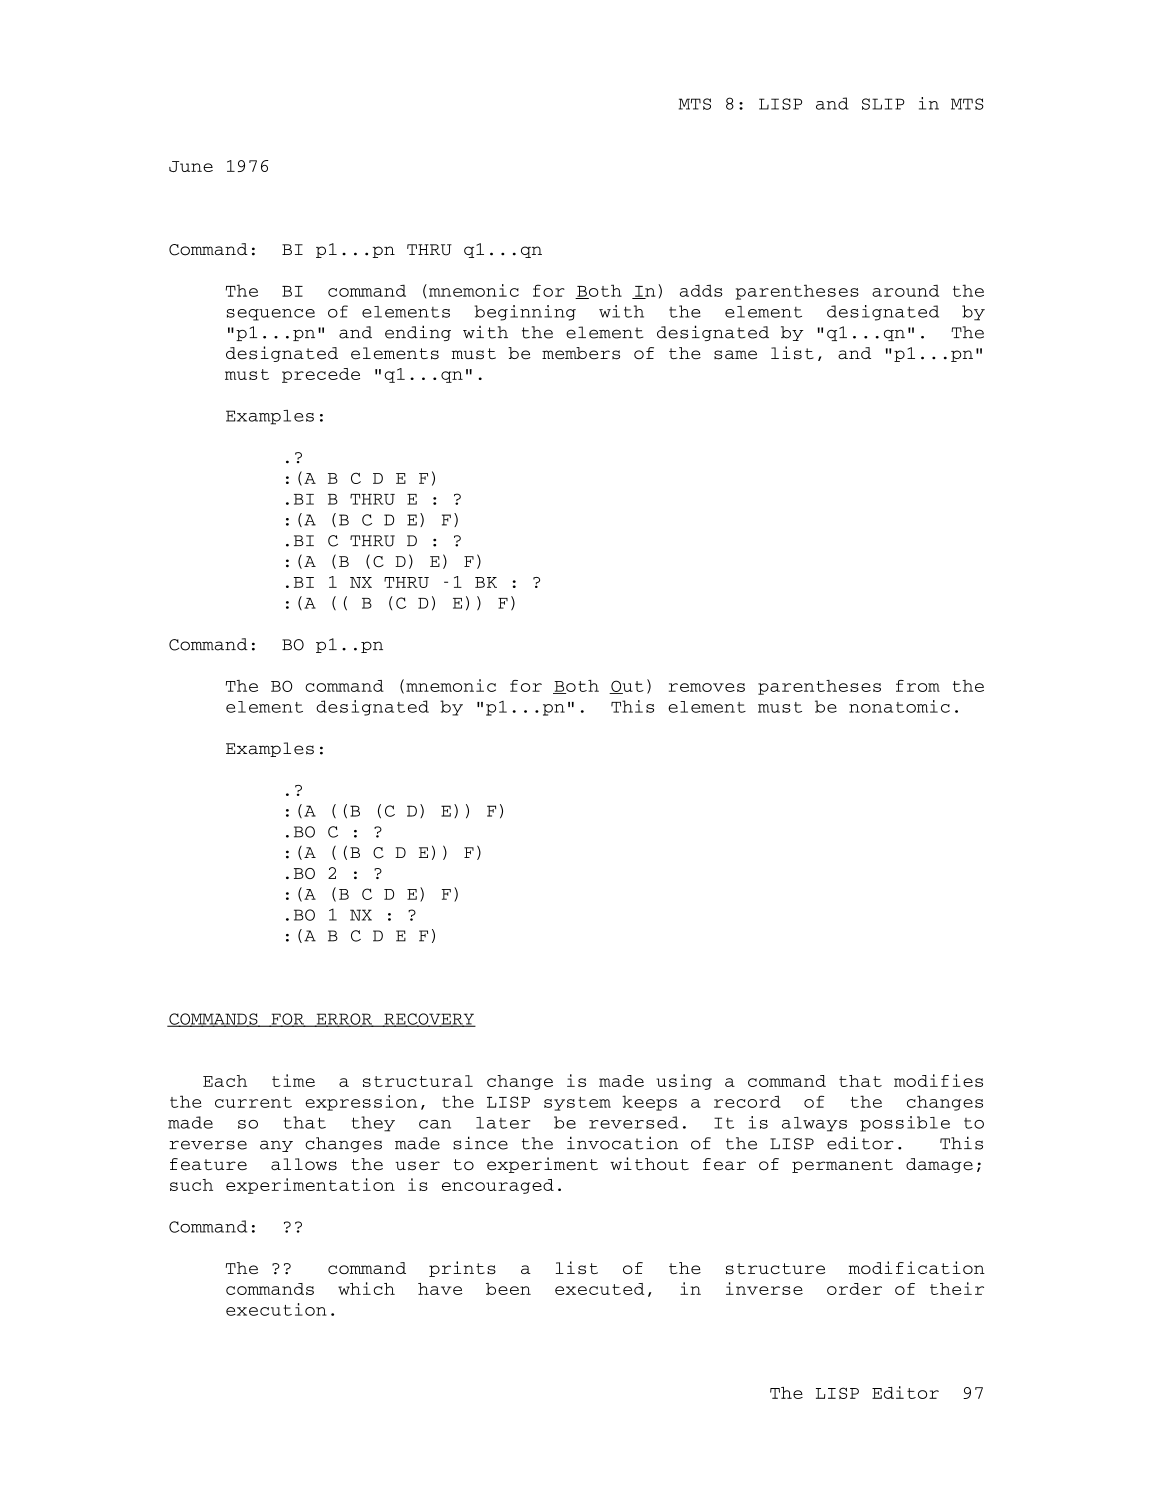 MTS Volume 8 - LISP and SLIP page 96